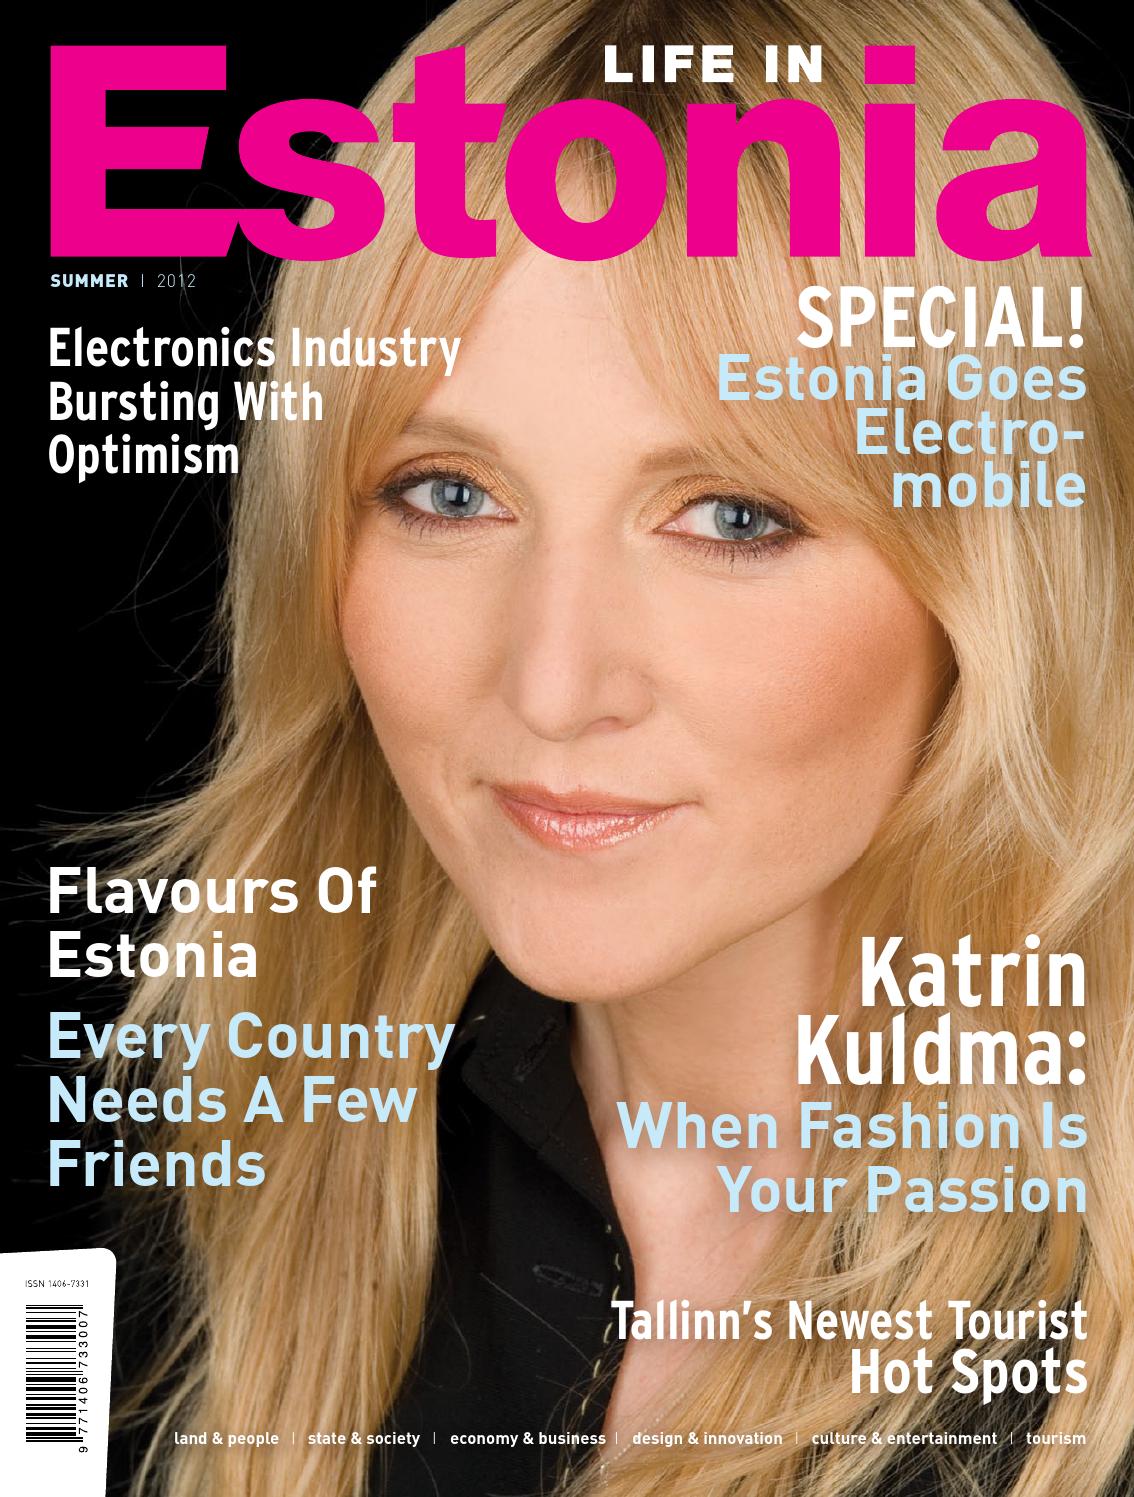 LIFE IN ESTONIA / Katrin Kuldma: When Fashion is Passion